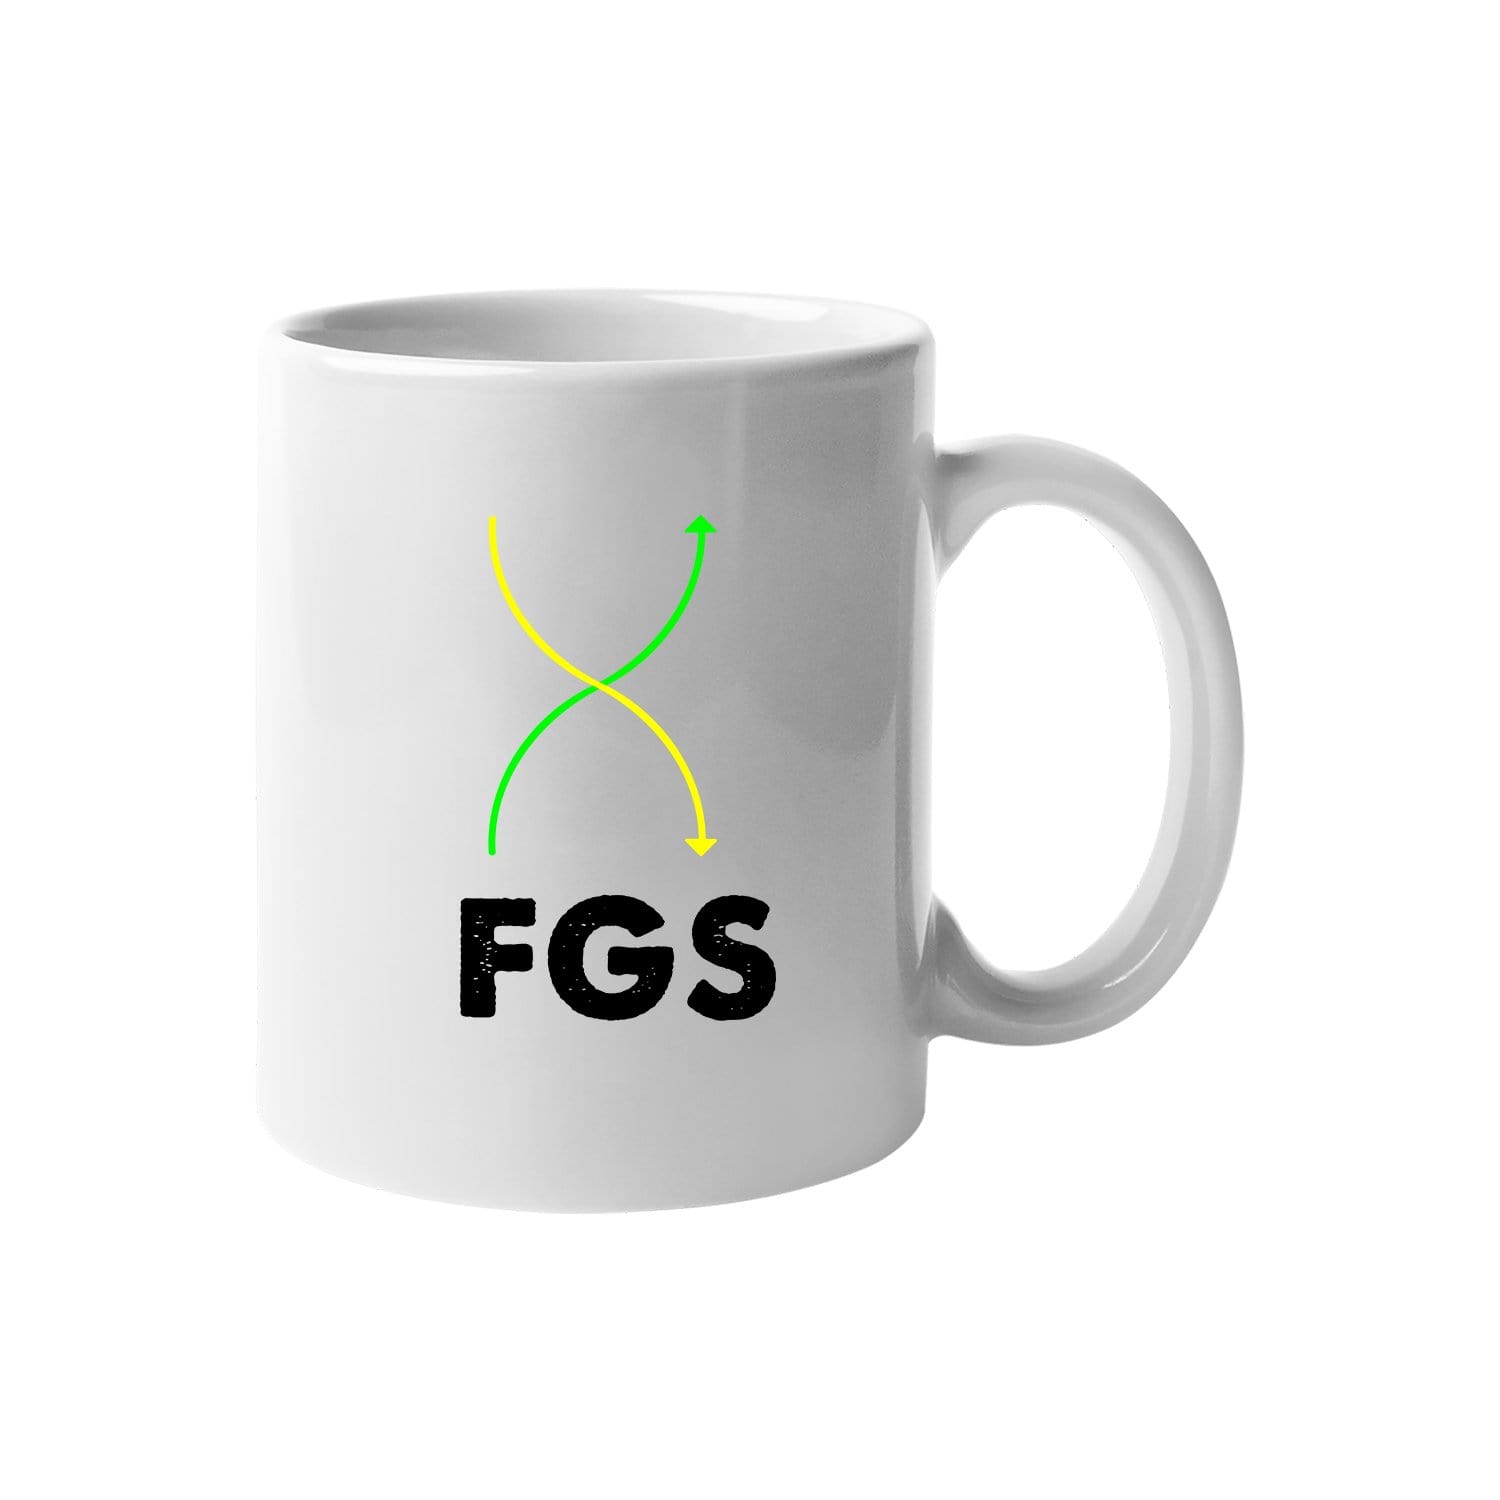 FGS design - Mug 11 oz